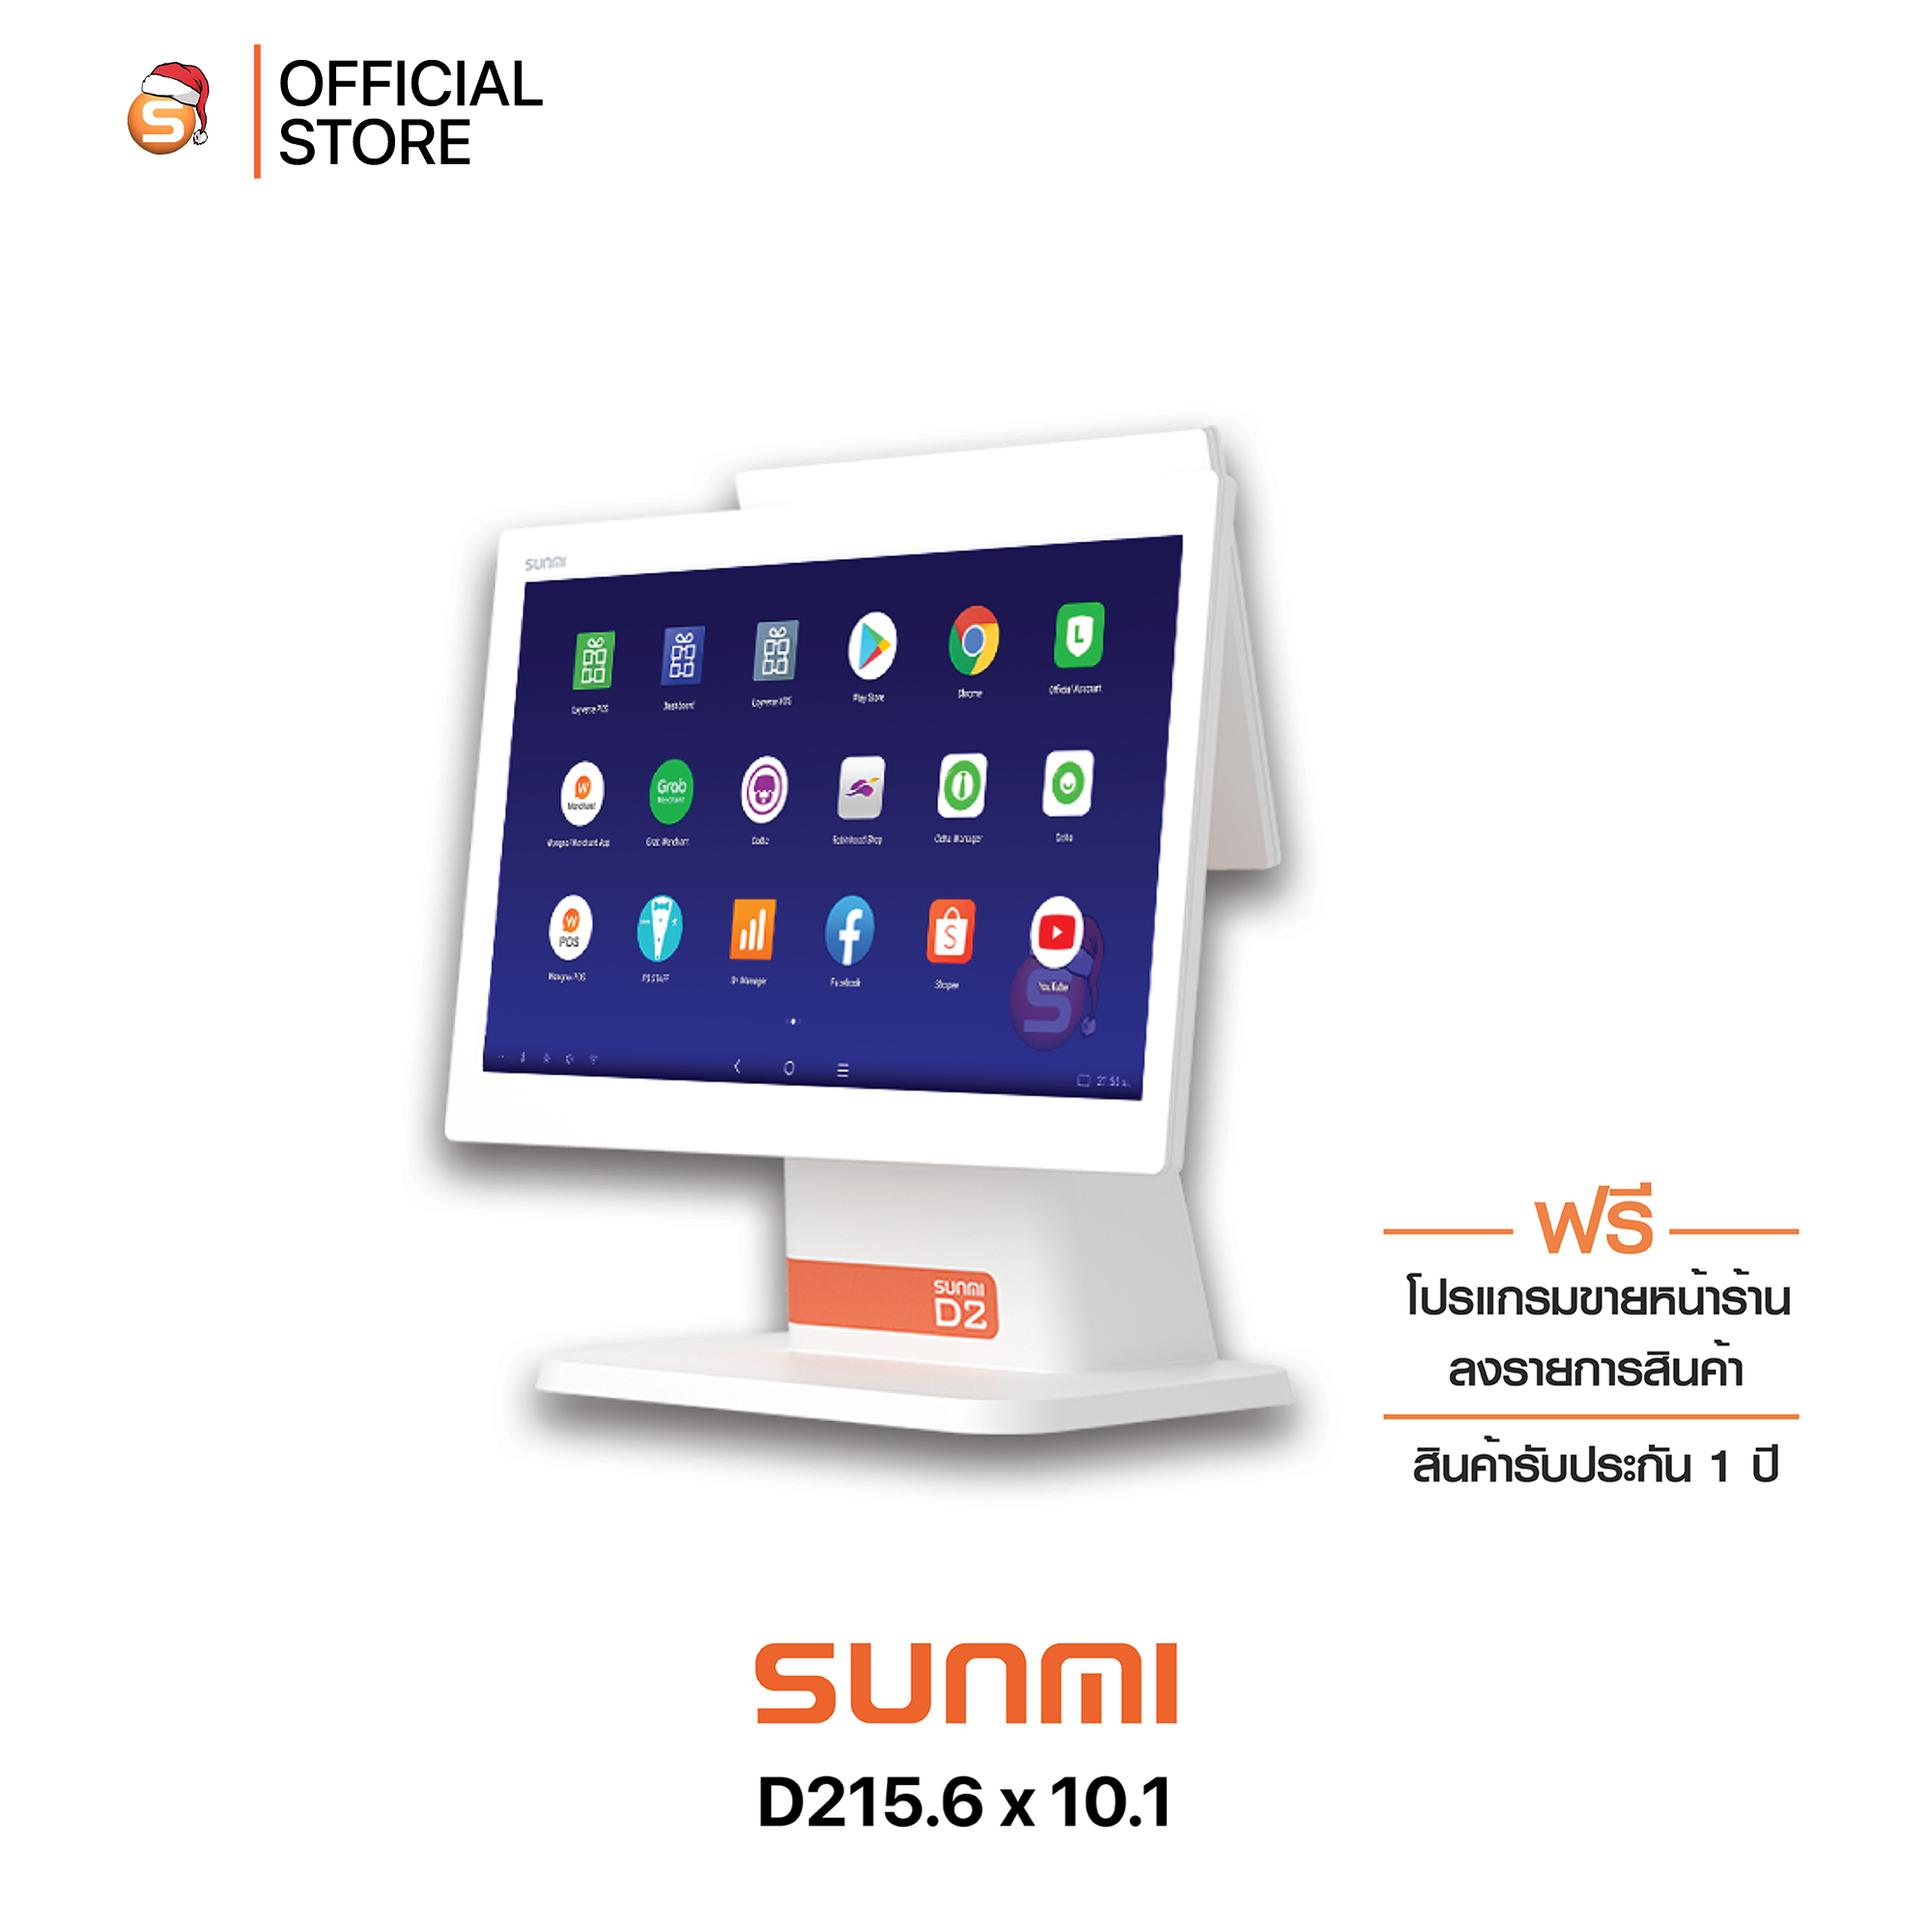 Sunmi D2 15.6+10.1  POS เครื่องคิดเงิน พร้อมโปรแกรมใช้ฟรี ไม่มีรายเดือน